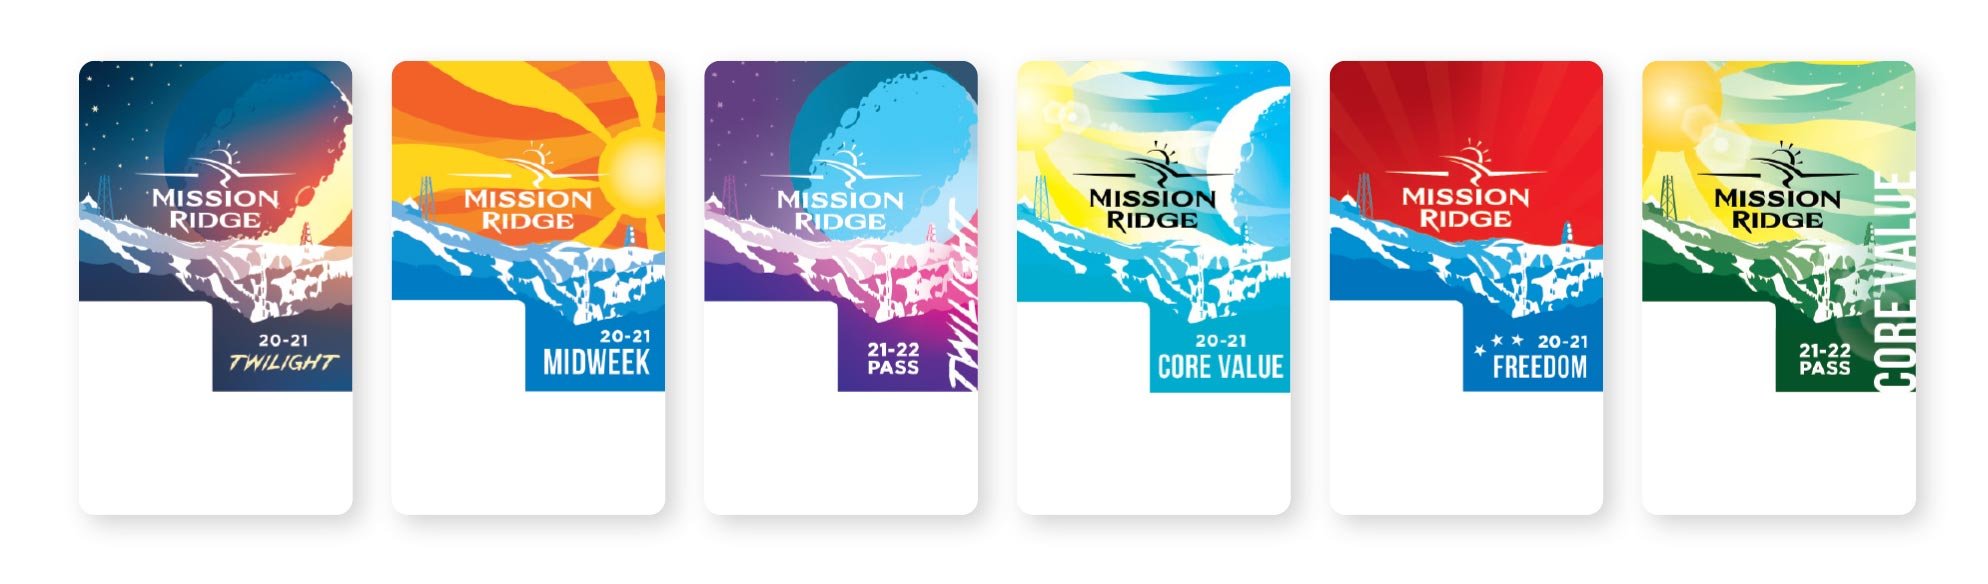 Mission-Ridge-Season-Passes.jpg